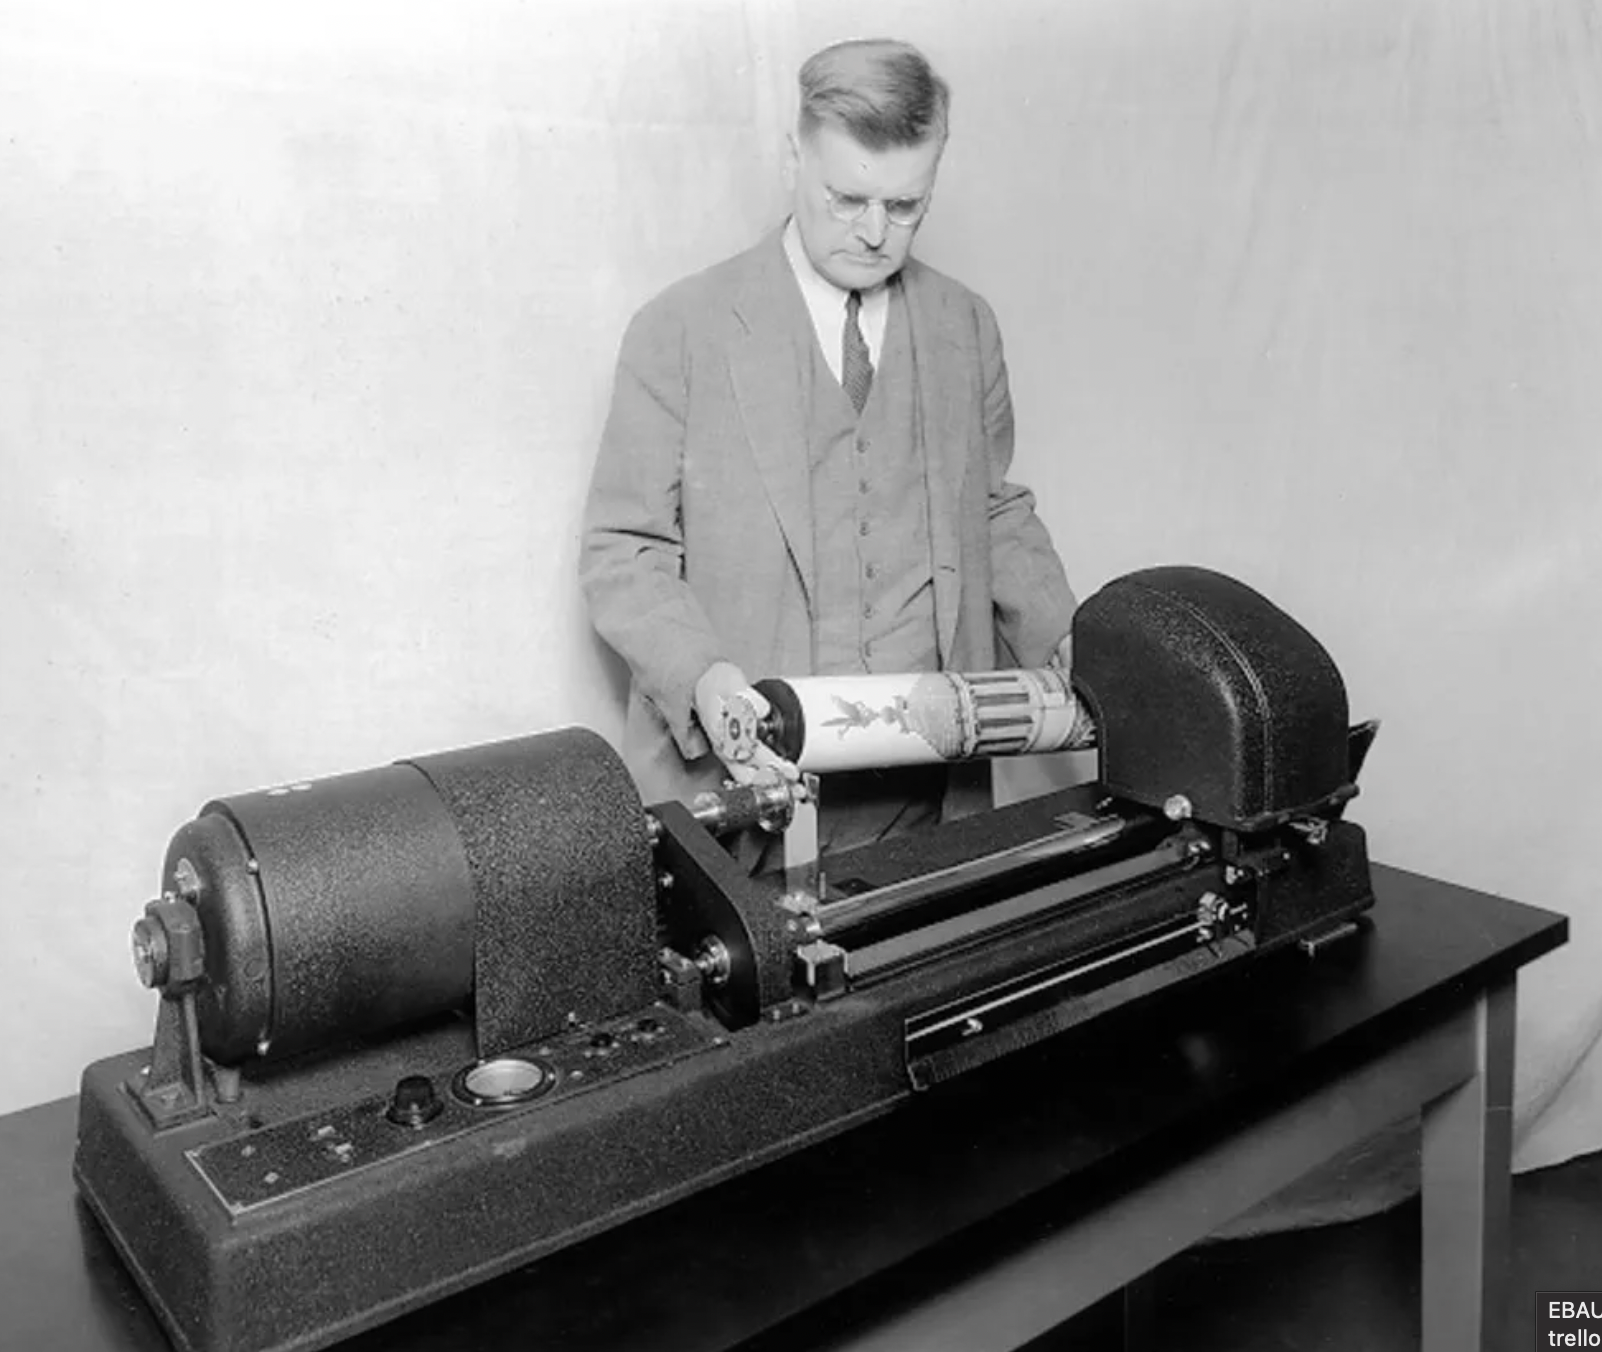 first fax machine invented - Ebal trello